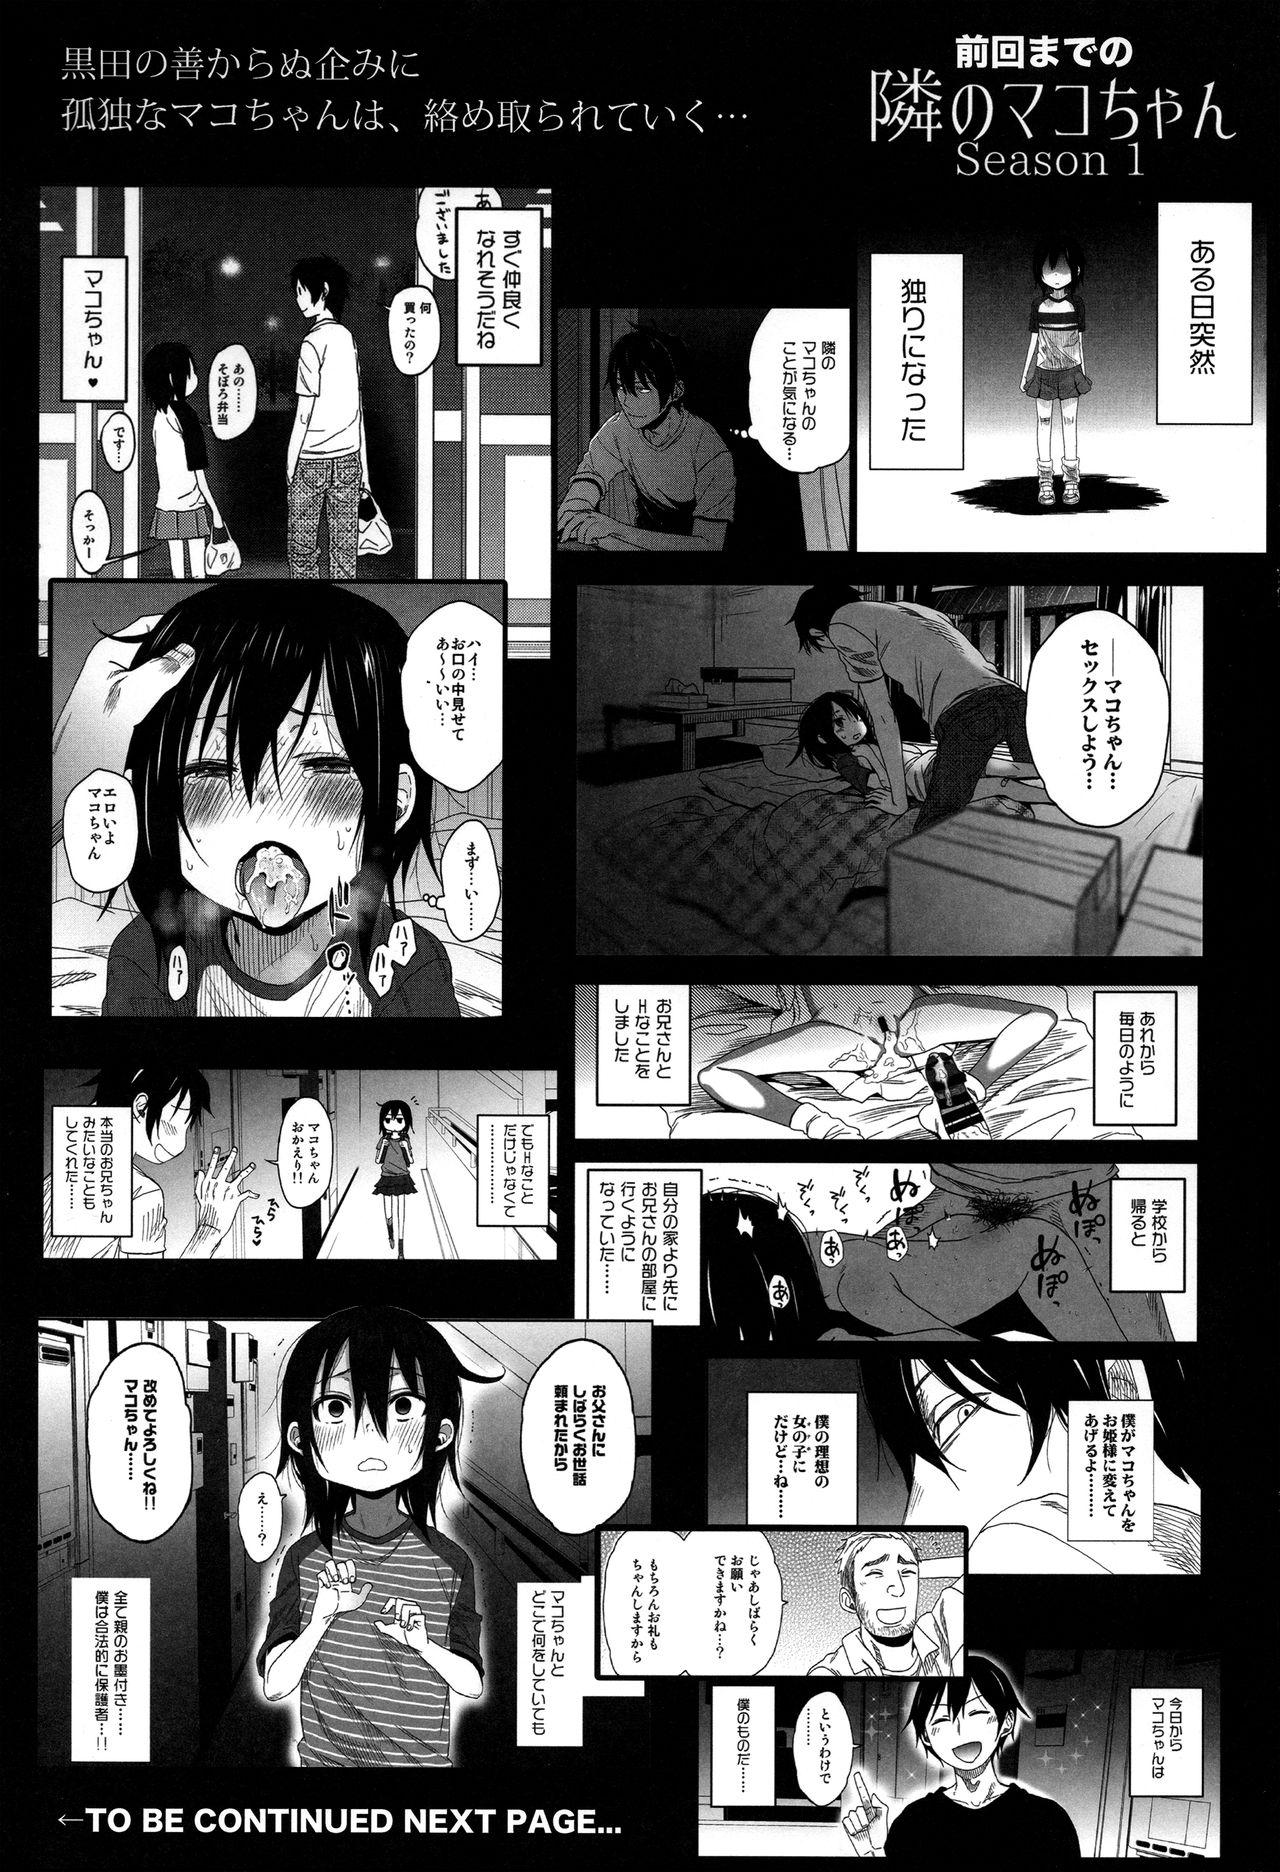 Bucetinha Tonari no Mako-chan Season 2 Vol. 1 - Original Cheat - Page 3